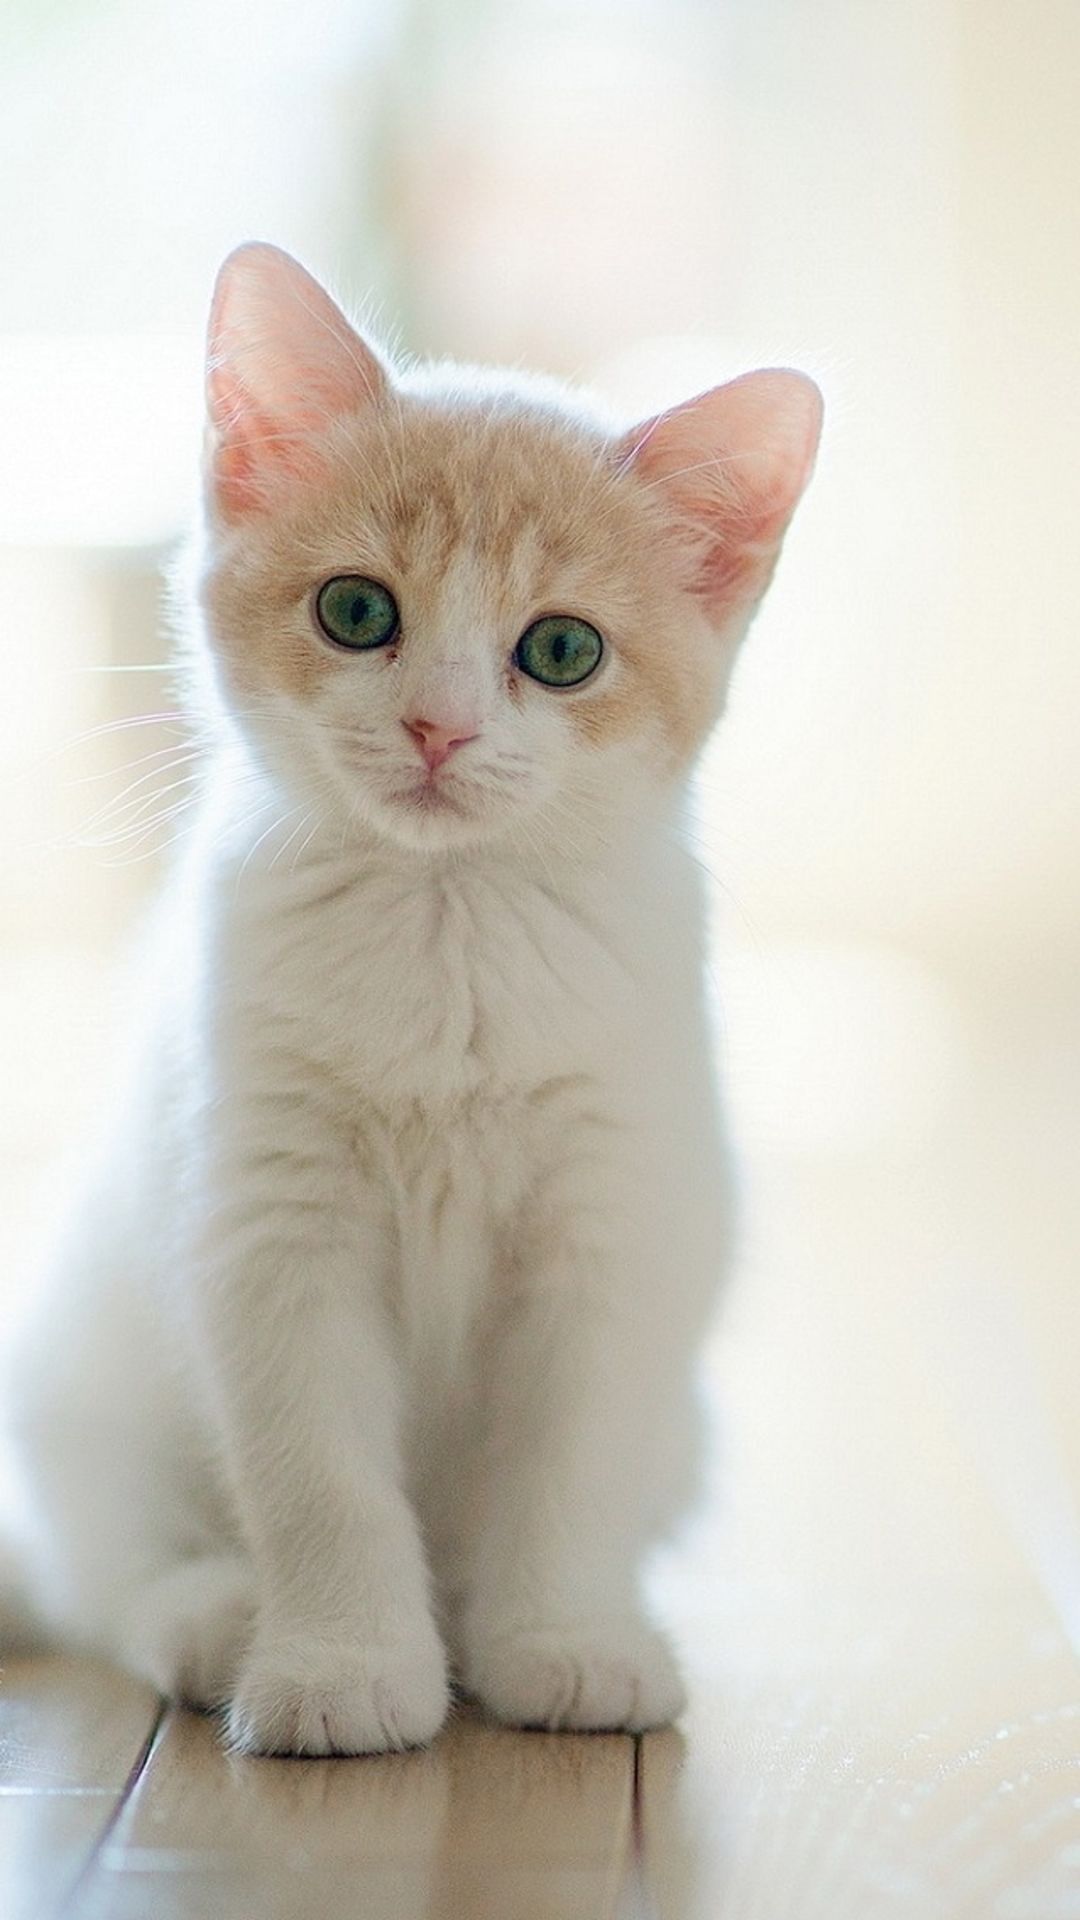 Cute Lovely Staring Kitten Cat iPhone 6 wallpaper. Baby cats, Pretty cats, Cute cat wallpaper